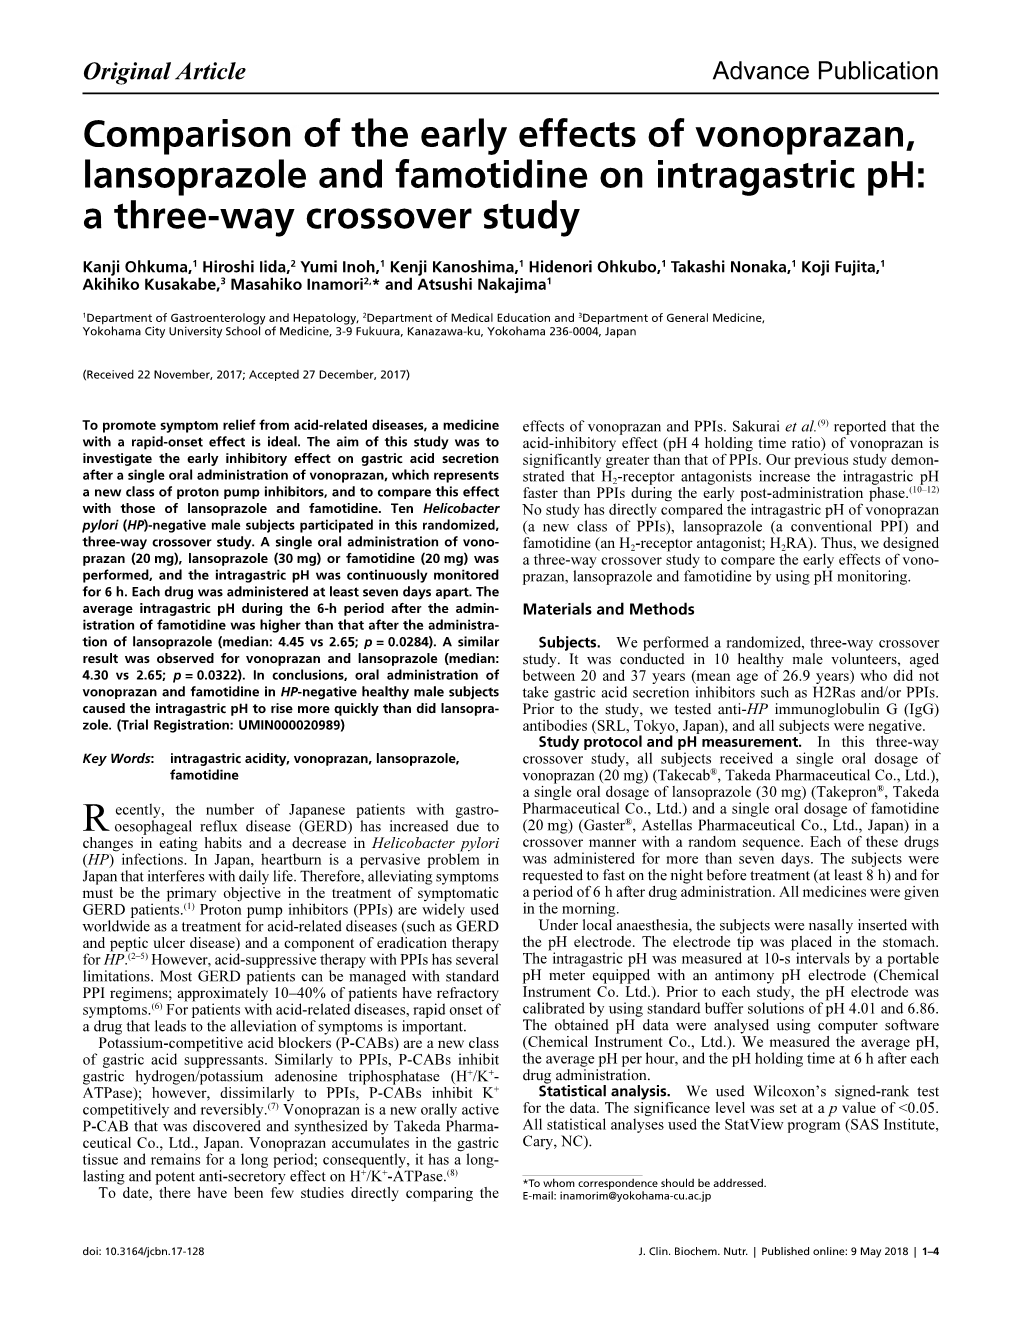 Comparison of the Early Effects of Vonoprazan, Lansoprazole